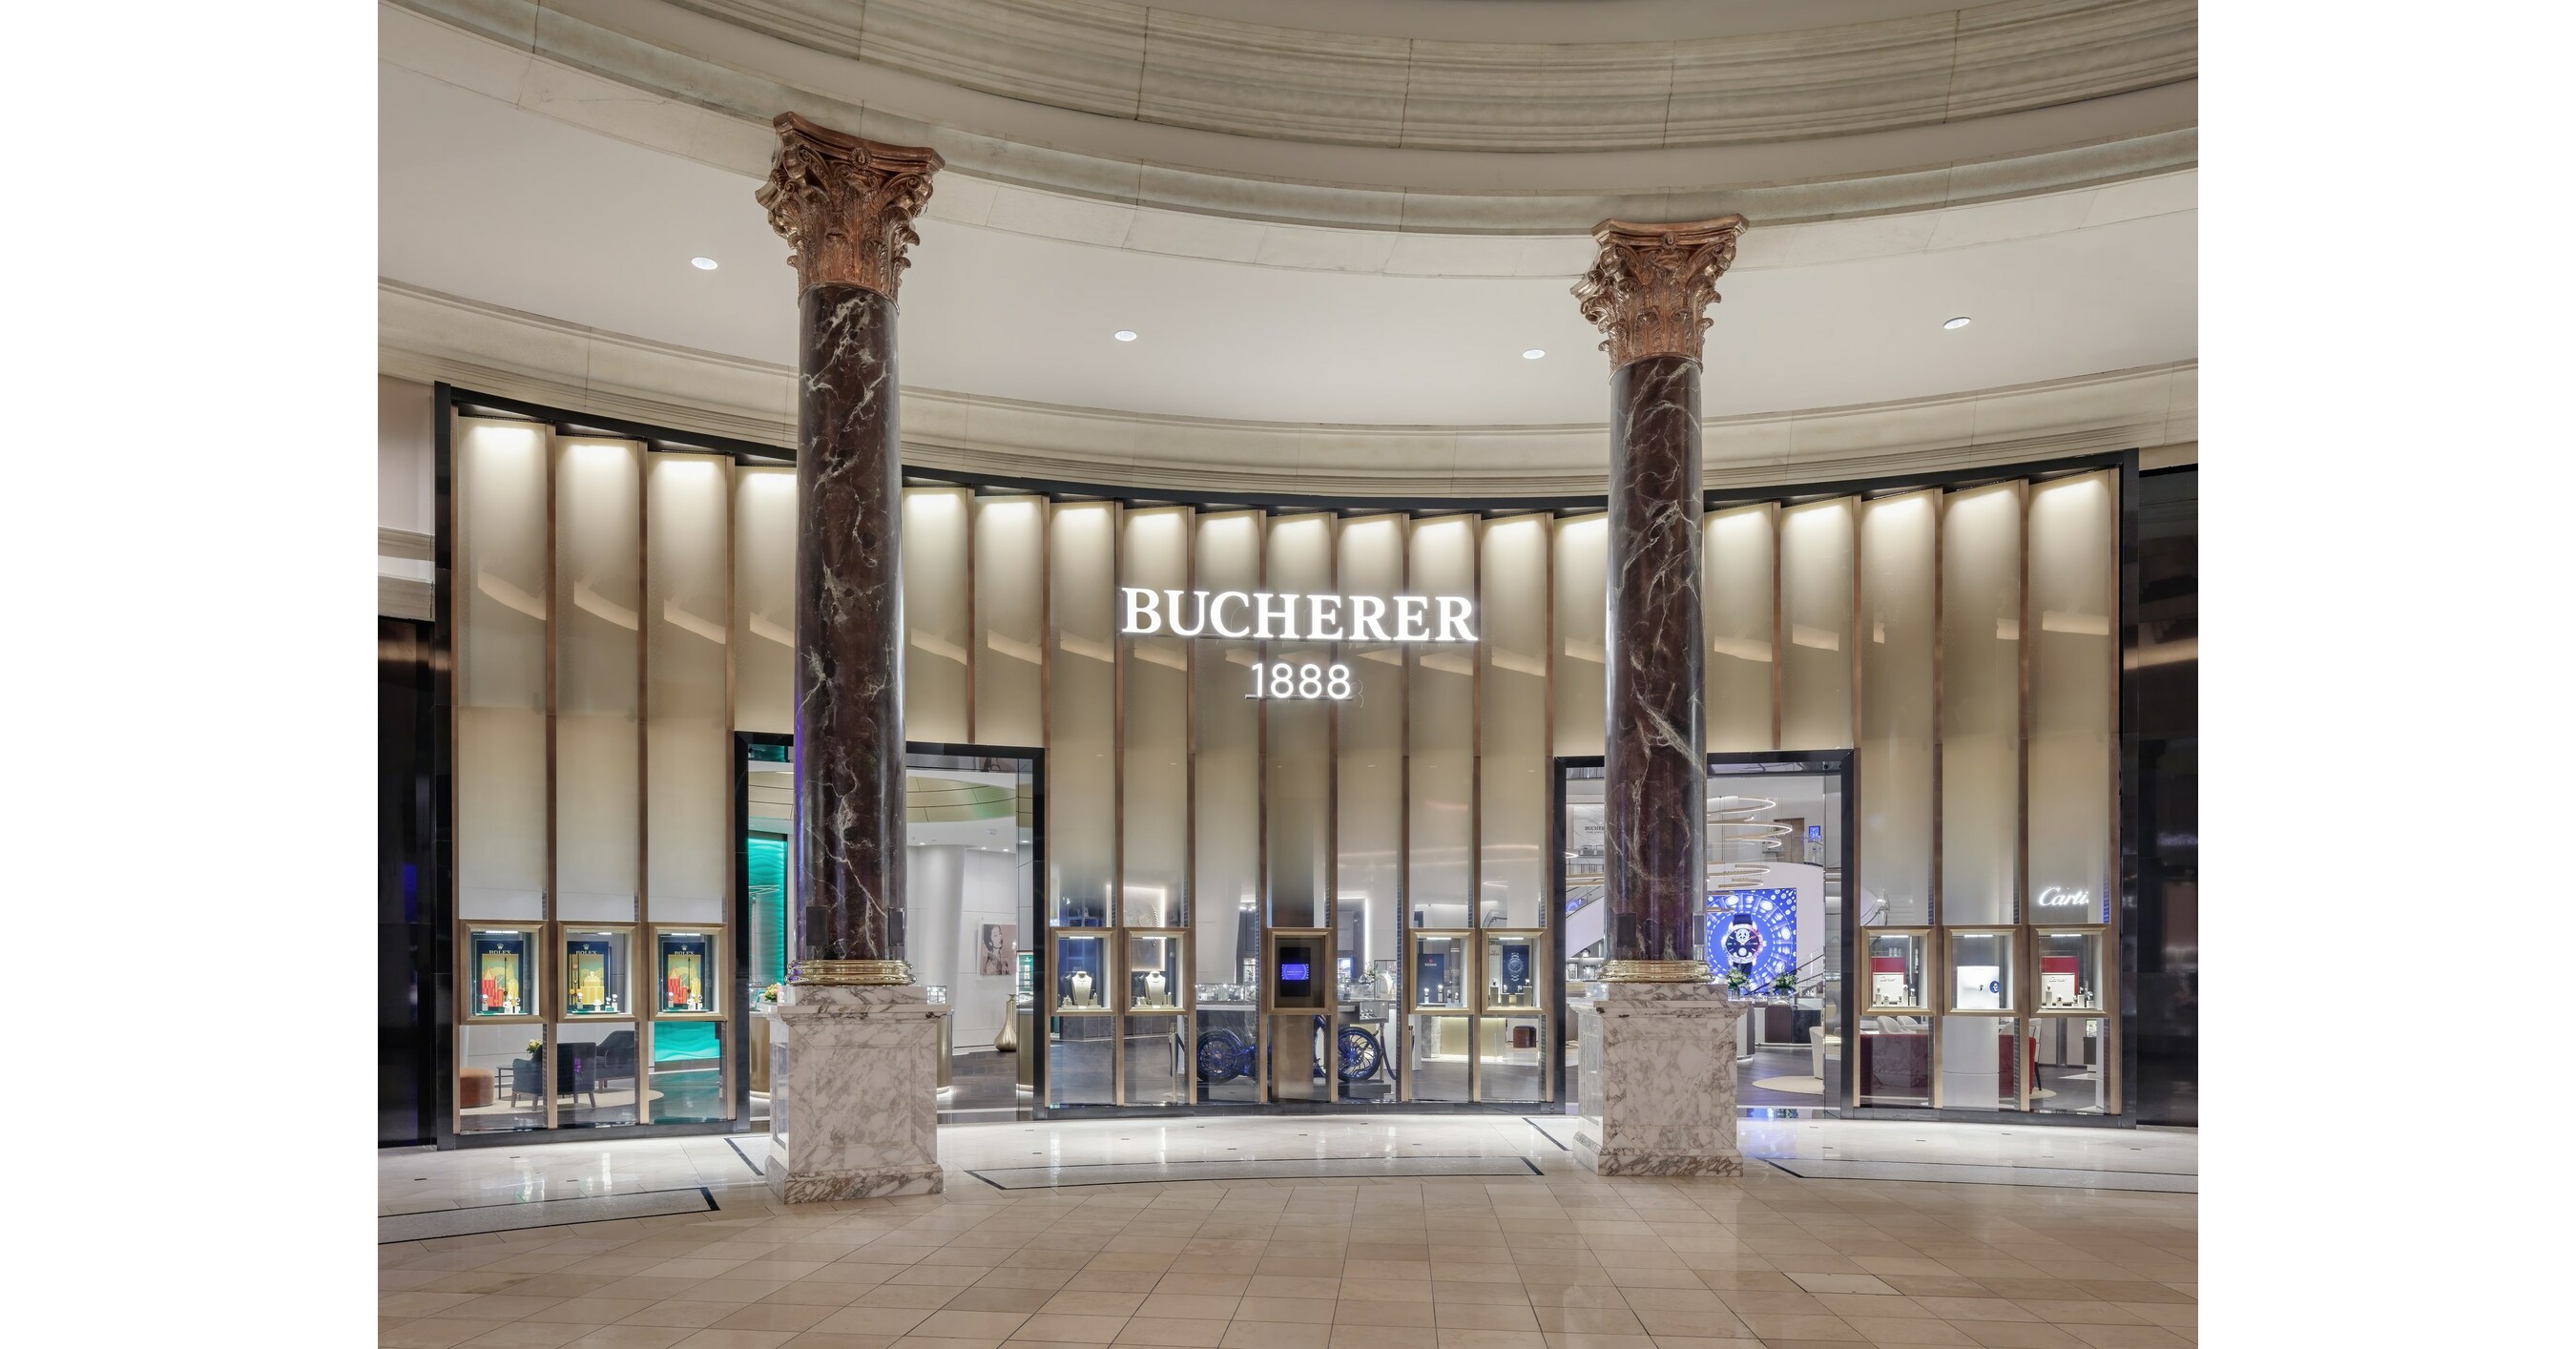 Tourneau  Bucherer: Shop Exceptional Watches & Fine Jewelry